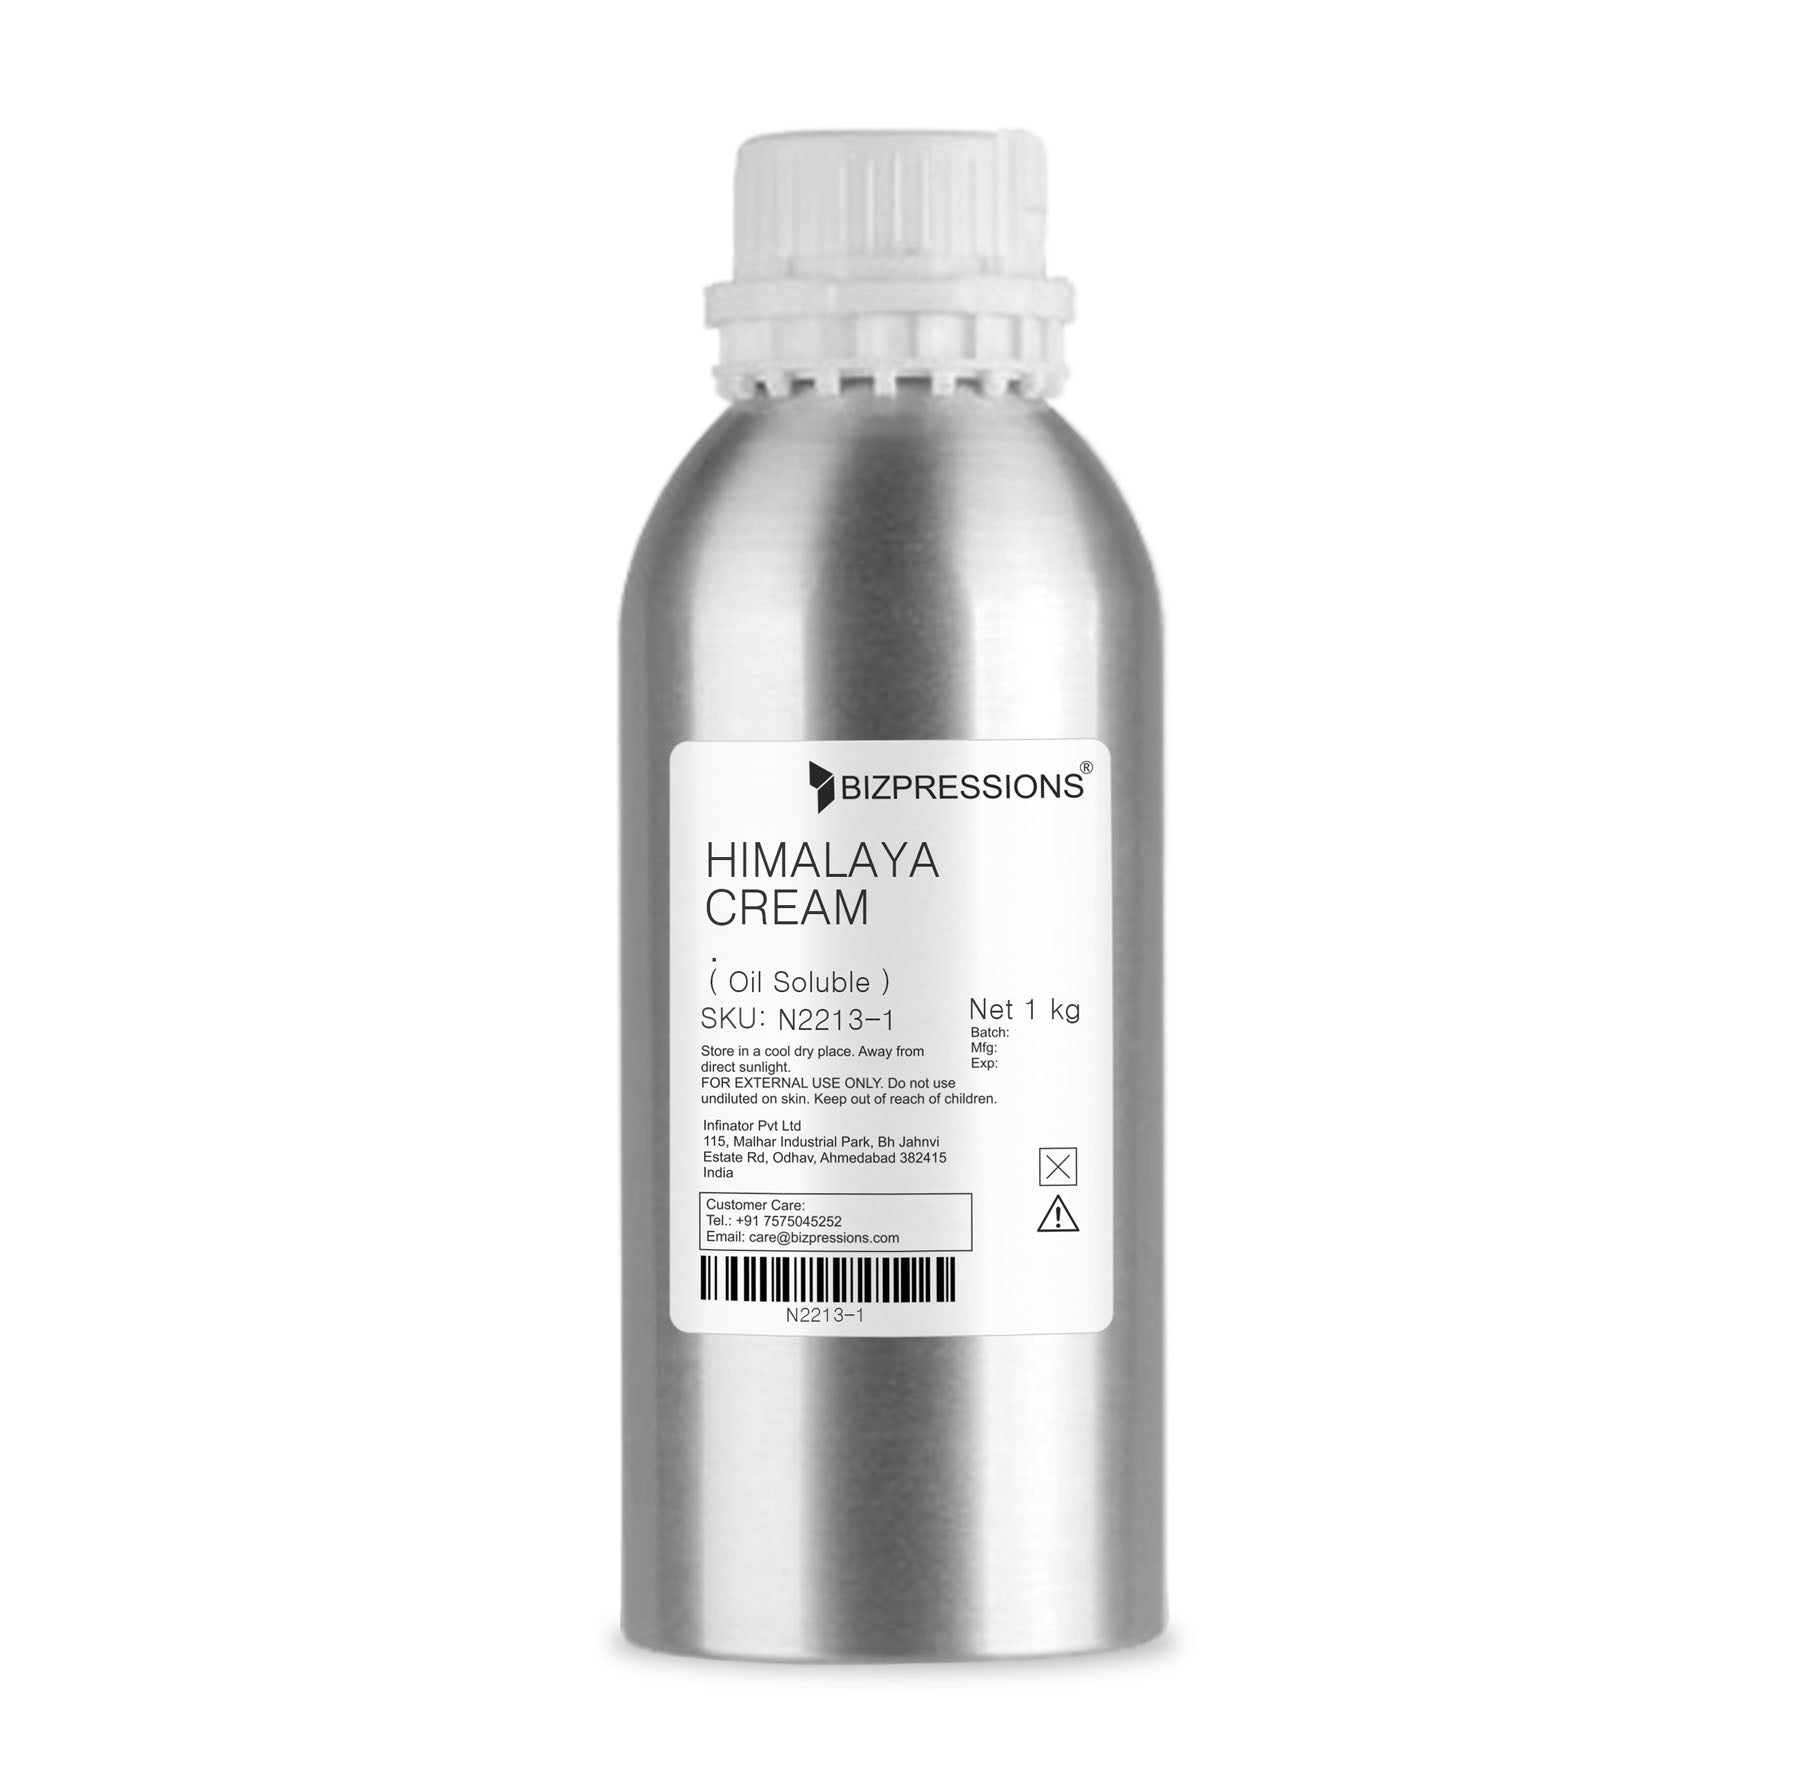 HIMALAYA CREAM - Fragrance ( Oil Soluble ) - 1 kg